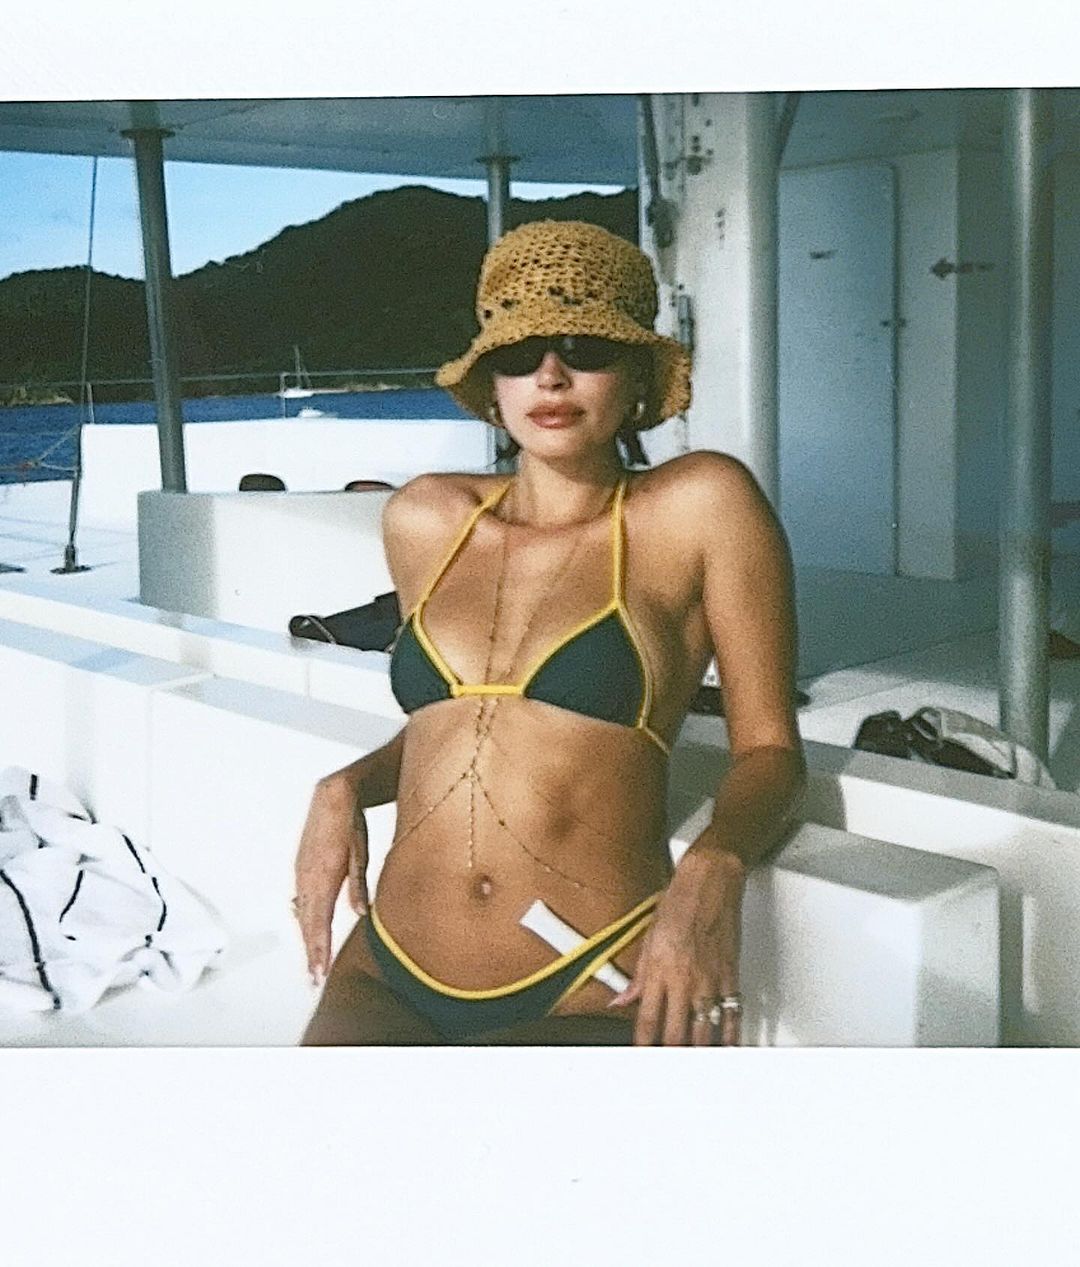 Photos n°5 : Hailey Bieber’s Booty on a Boat!